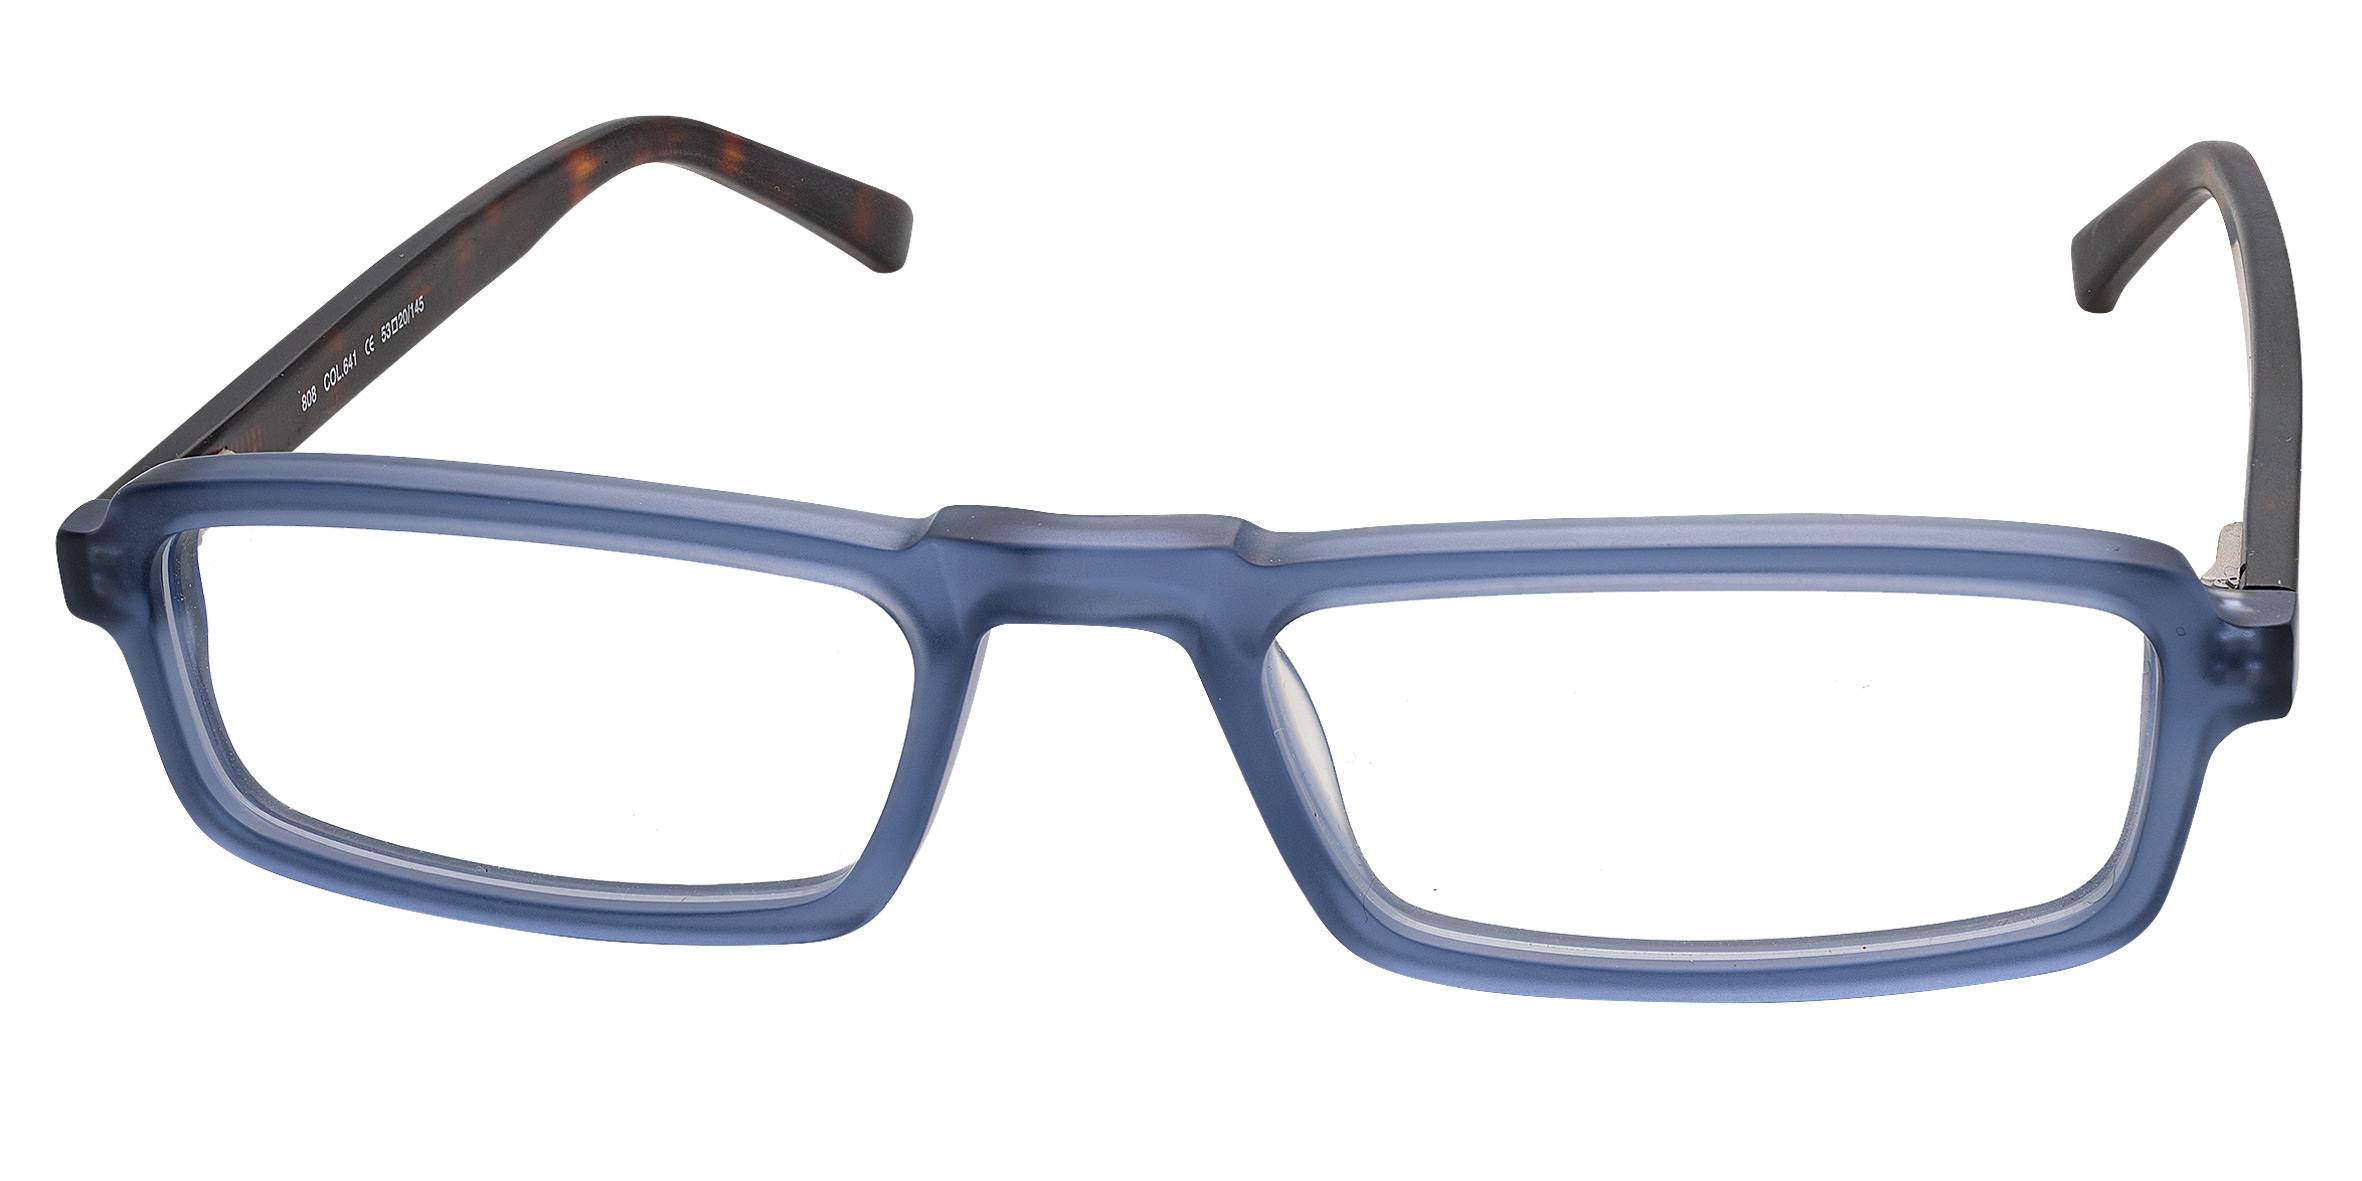 NCE Brillen, Modell 808 Col. 641 blau grau matt